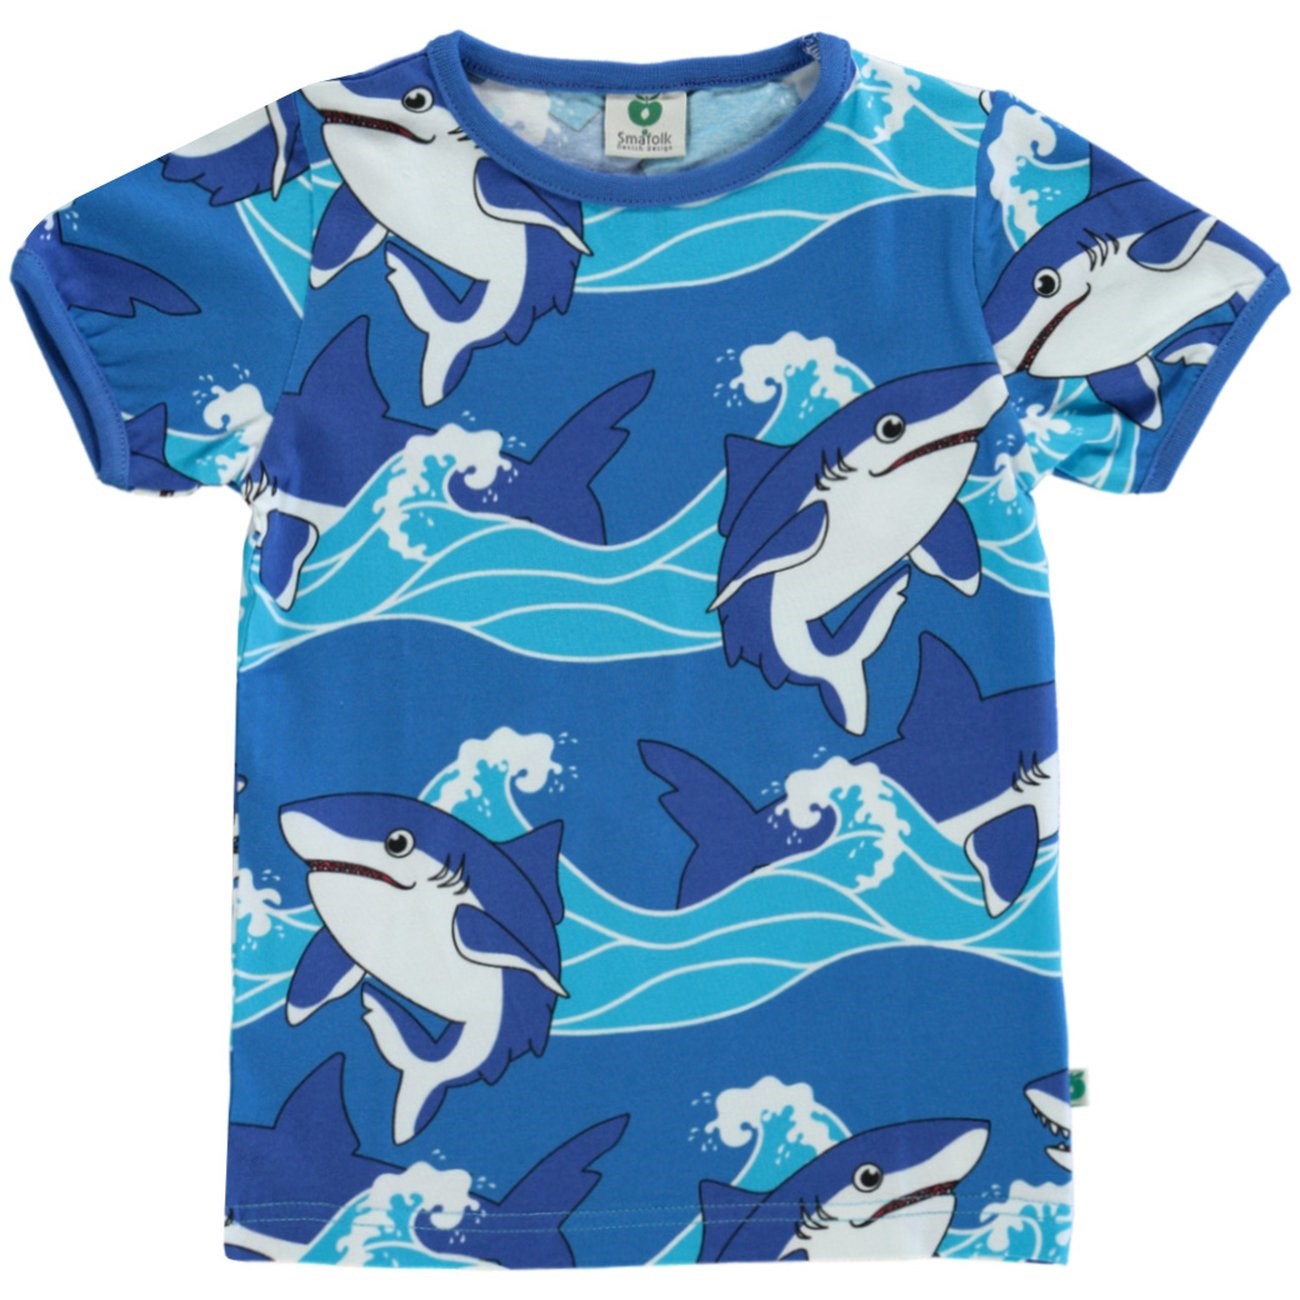 Småfolk Brilliant Blue T-Shirt With Sharks